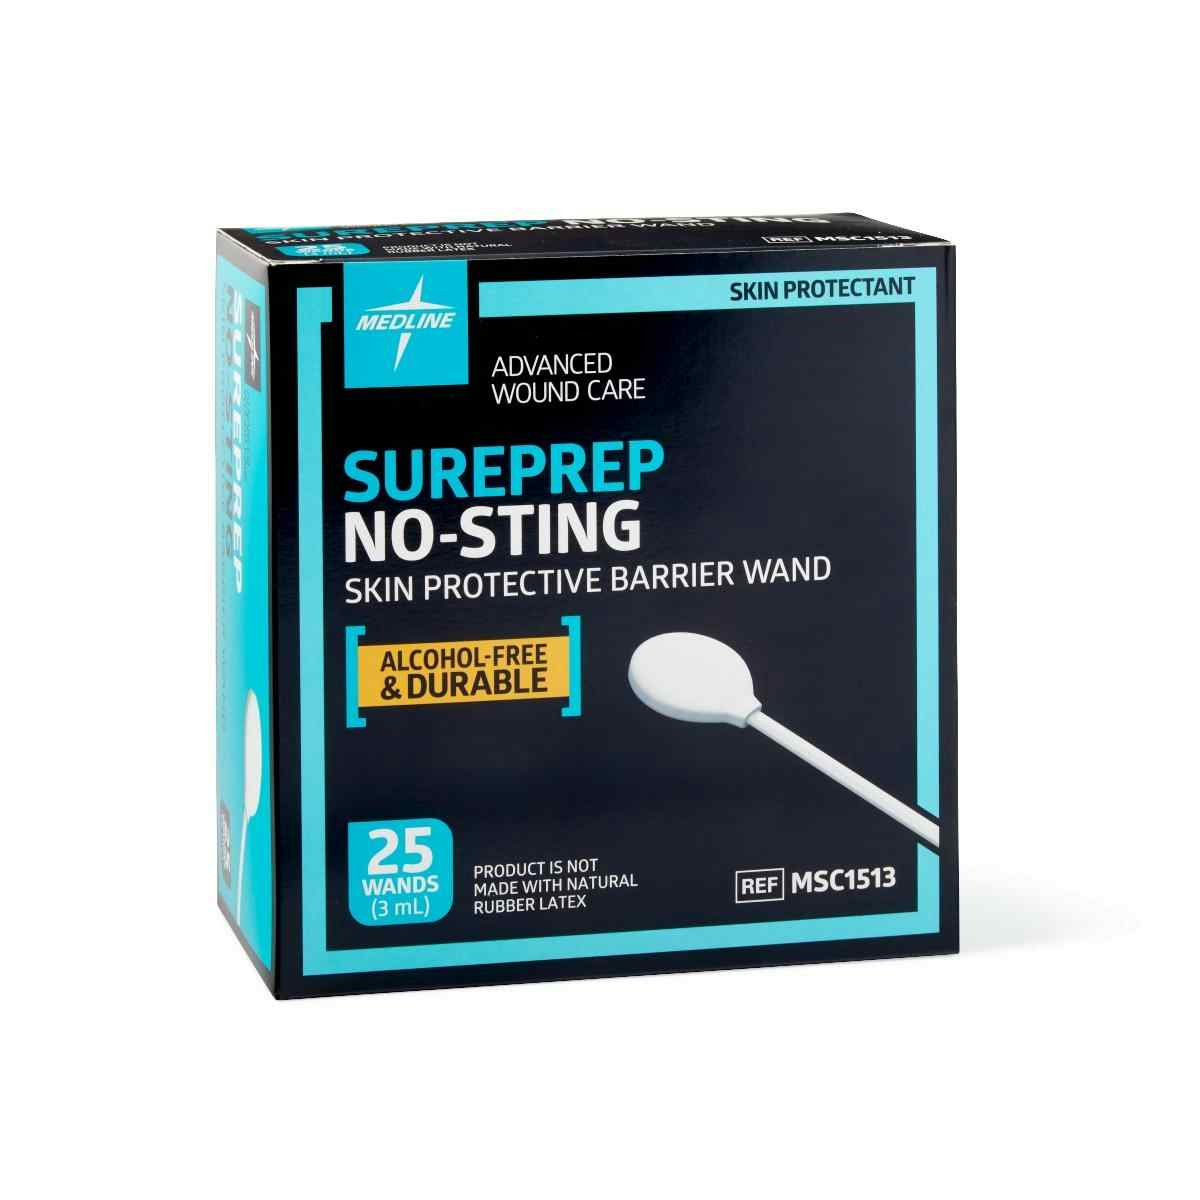 Medline Sureprep No-Sting Skin Protective Barrier Wand, MSC1513Z, 3 ml - Box of 25